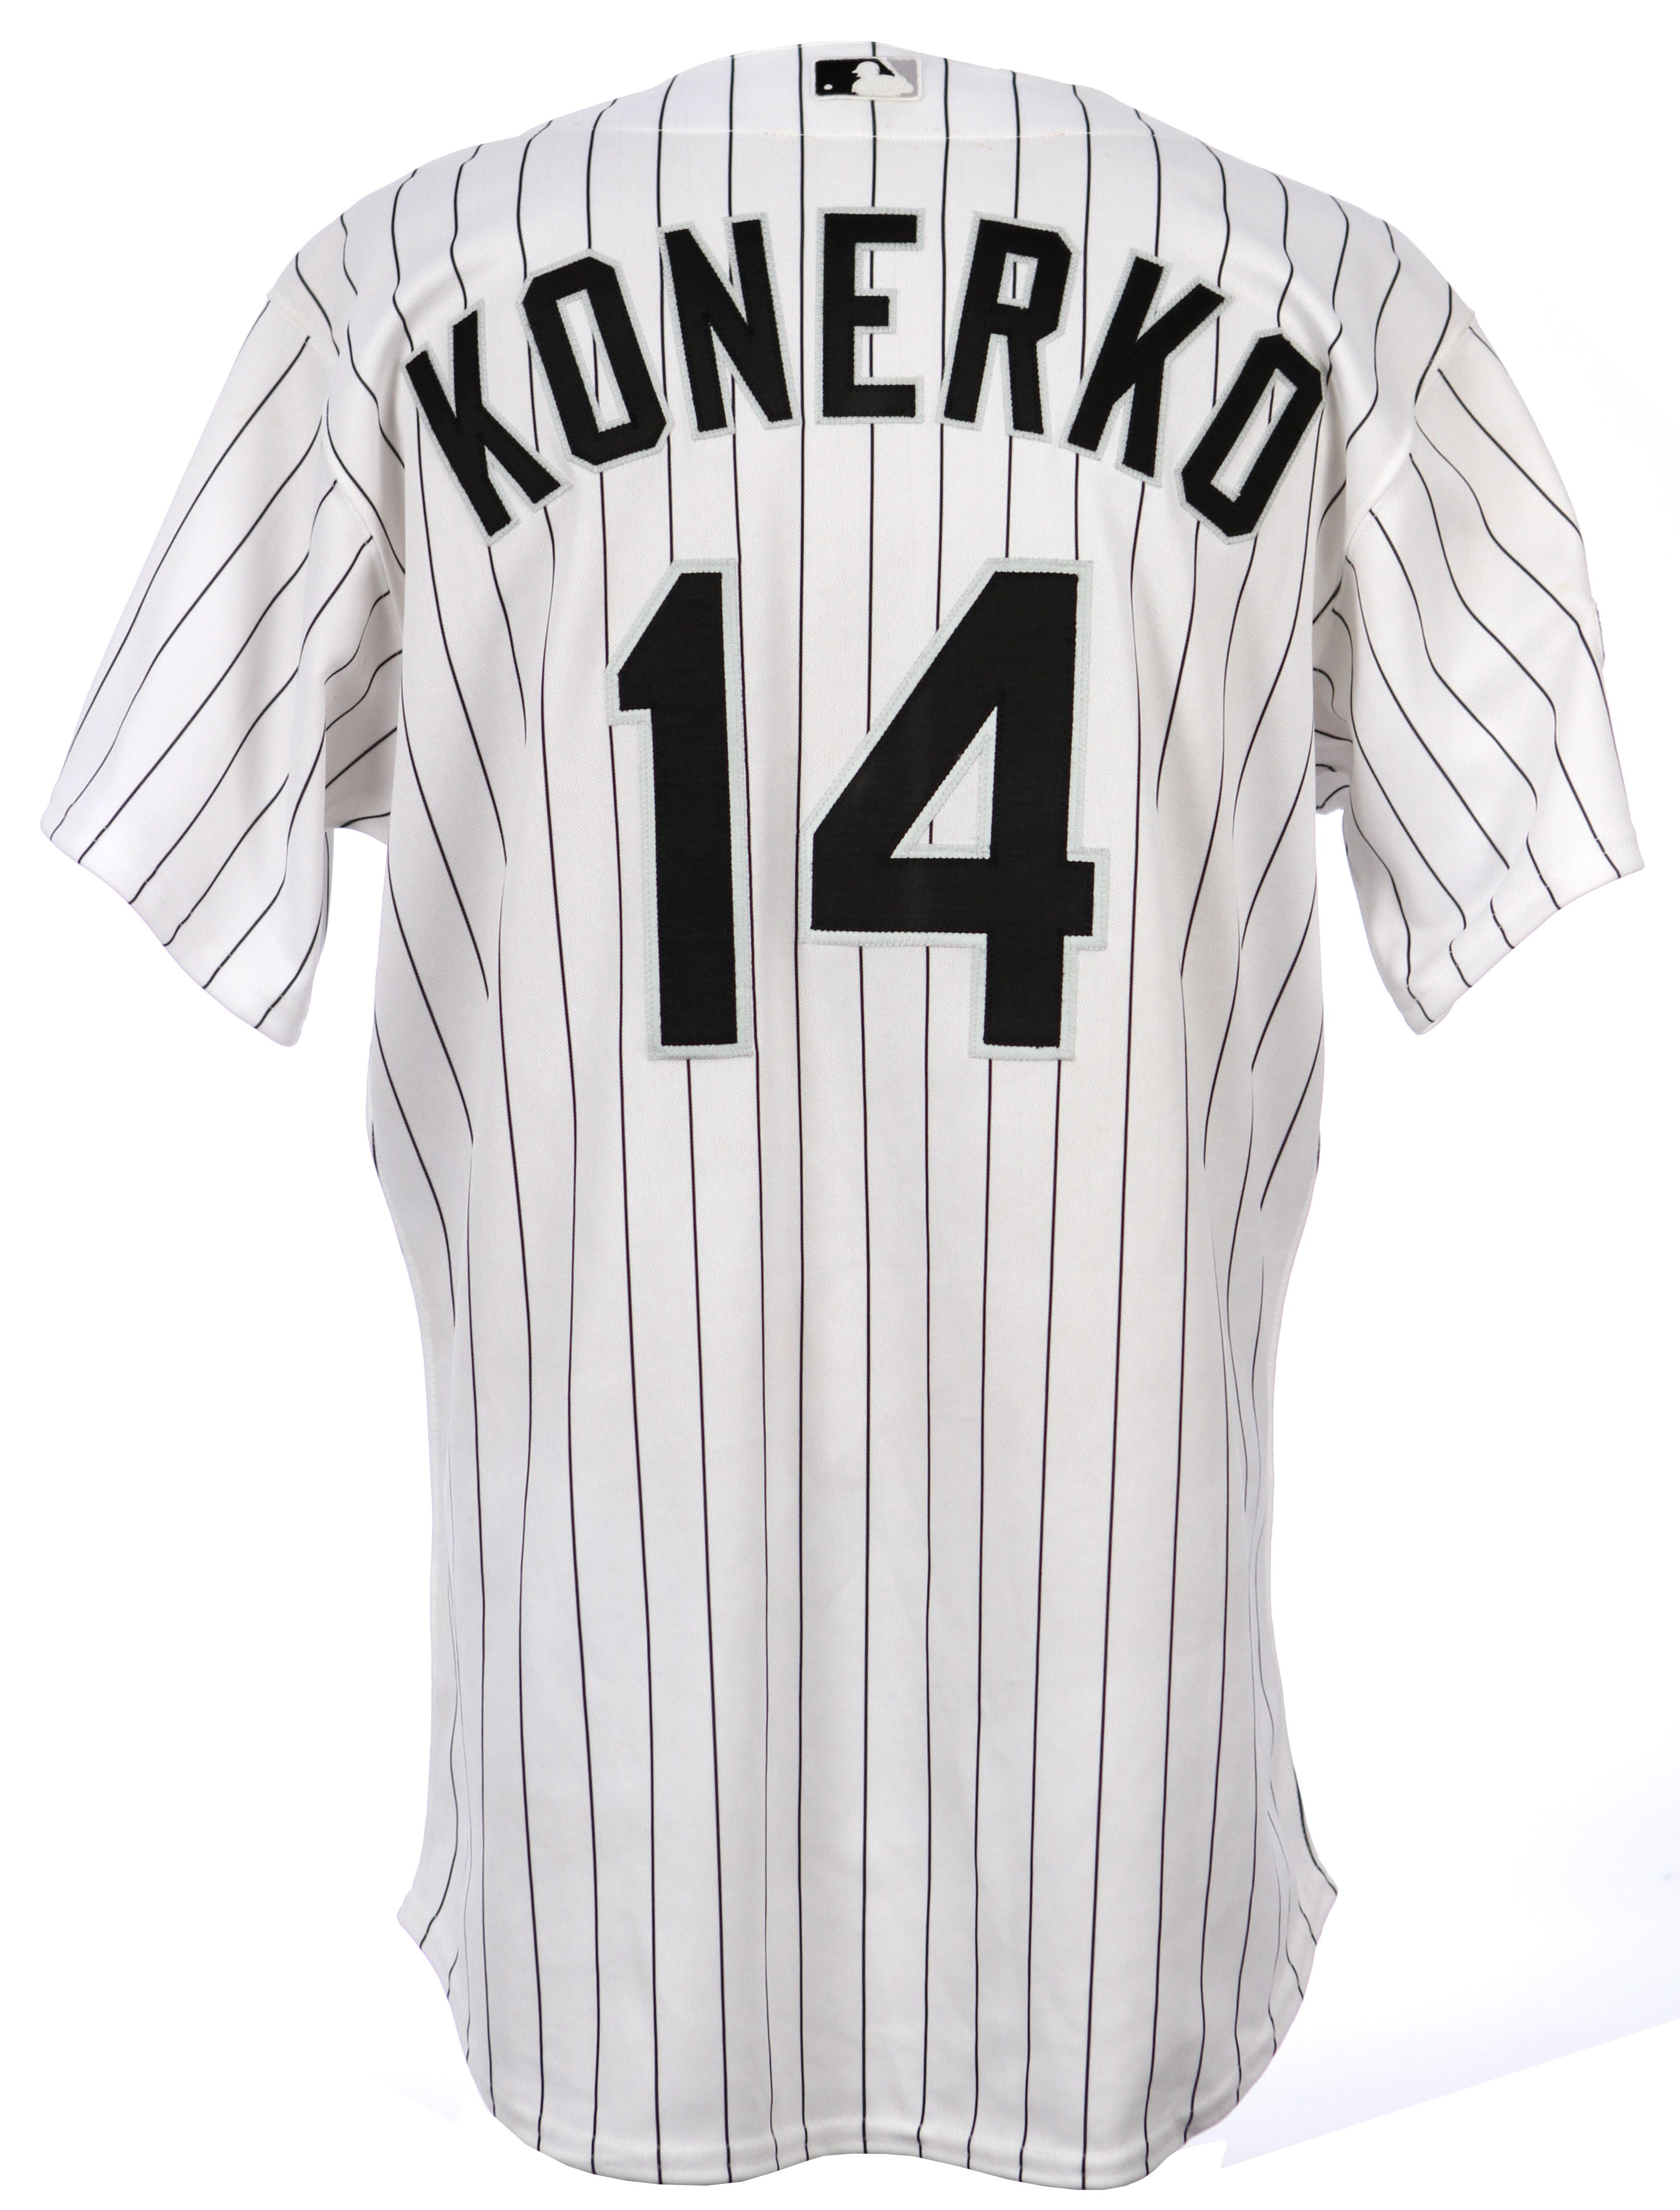 Paul Konerko Chicago White Sox Signed Autographed Gray Baseball